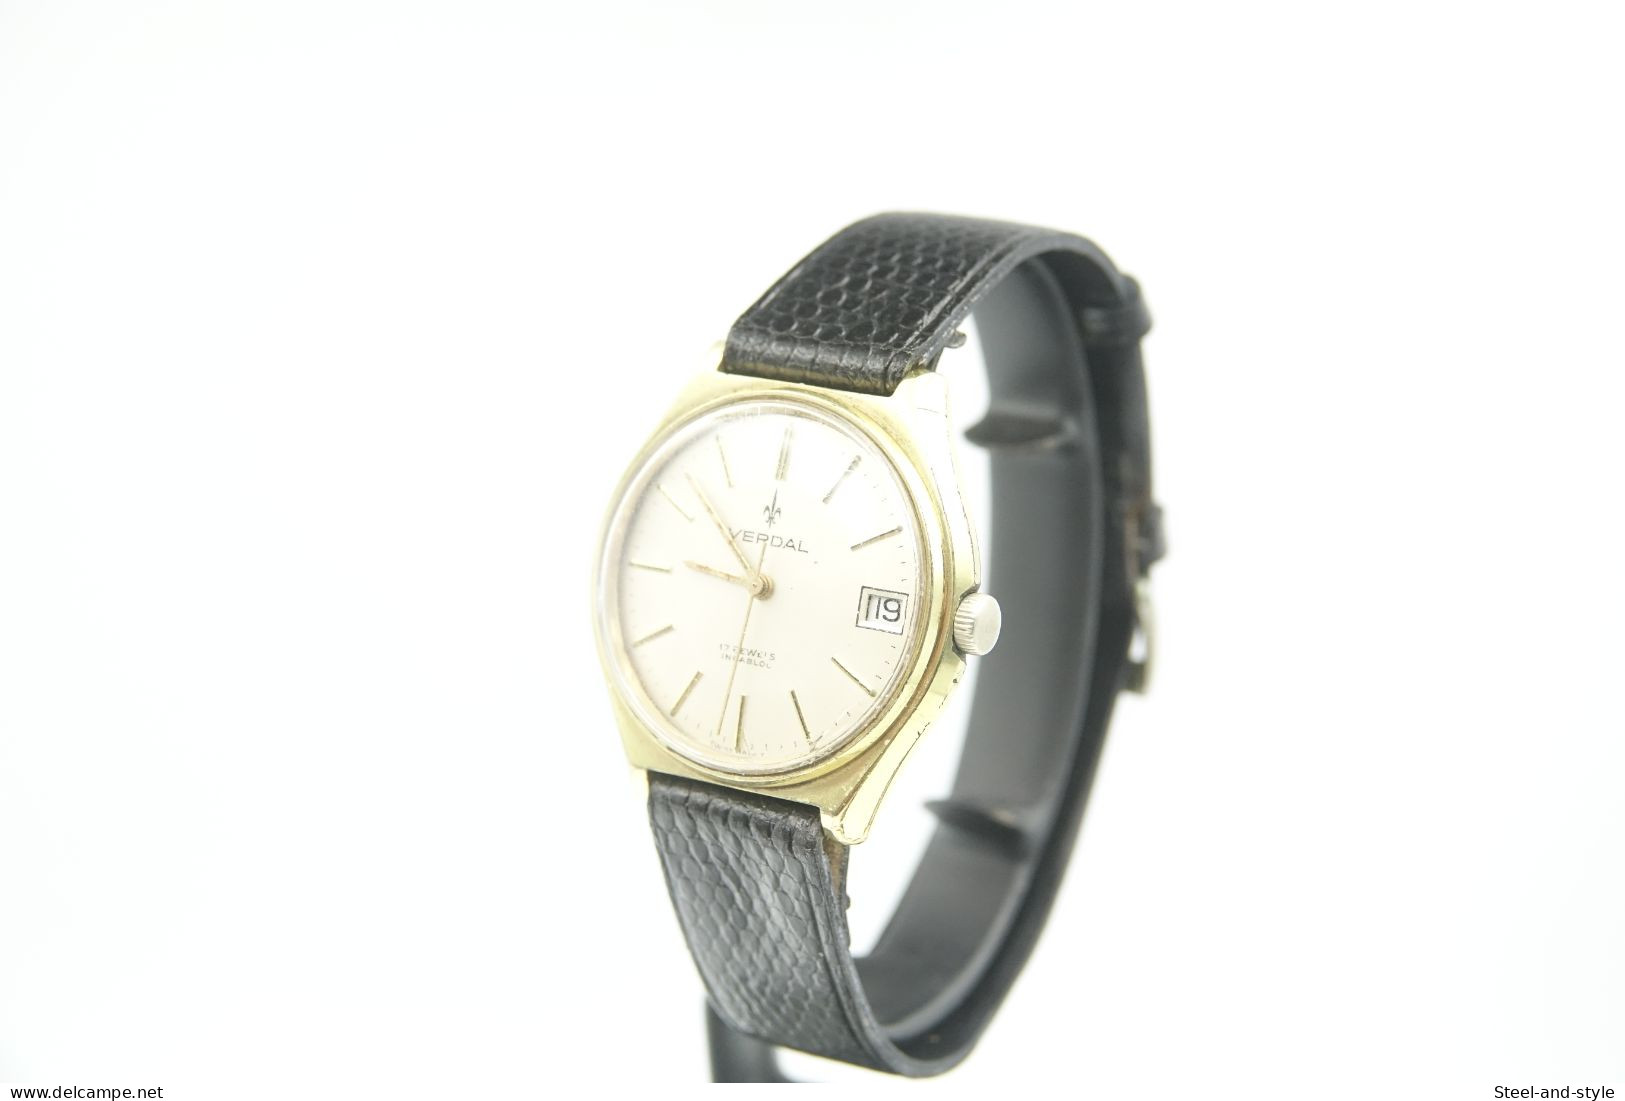 Watches : VERDAL 17 JEWELS INCABLOC HANDWIND - Original - Running - 1960s - Designeruhren